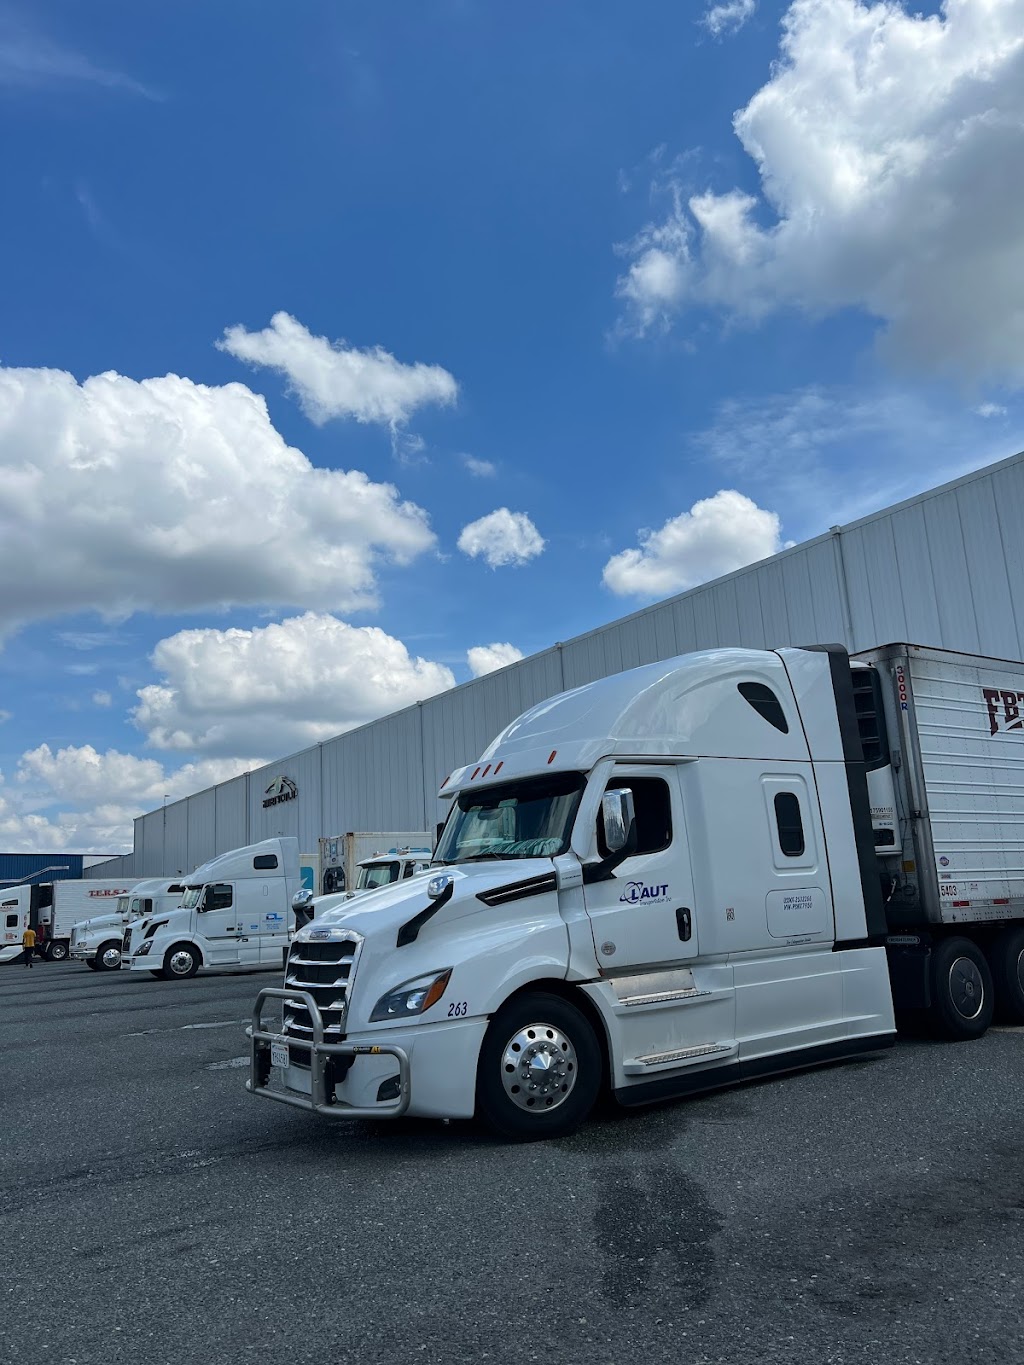 Americold Logistics - Vineland, NJ | 2321 Industrial Way, Vineland, NJ 08360 | Phone: (856) 690-9000